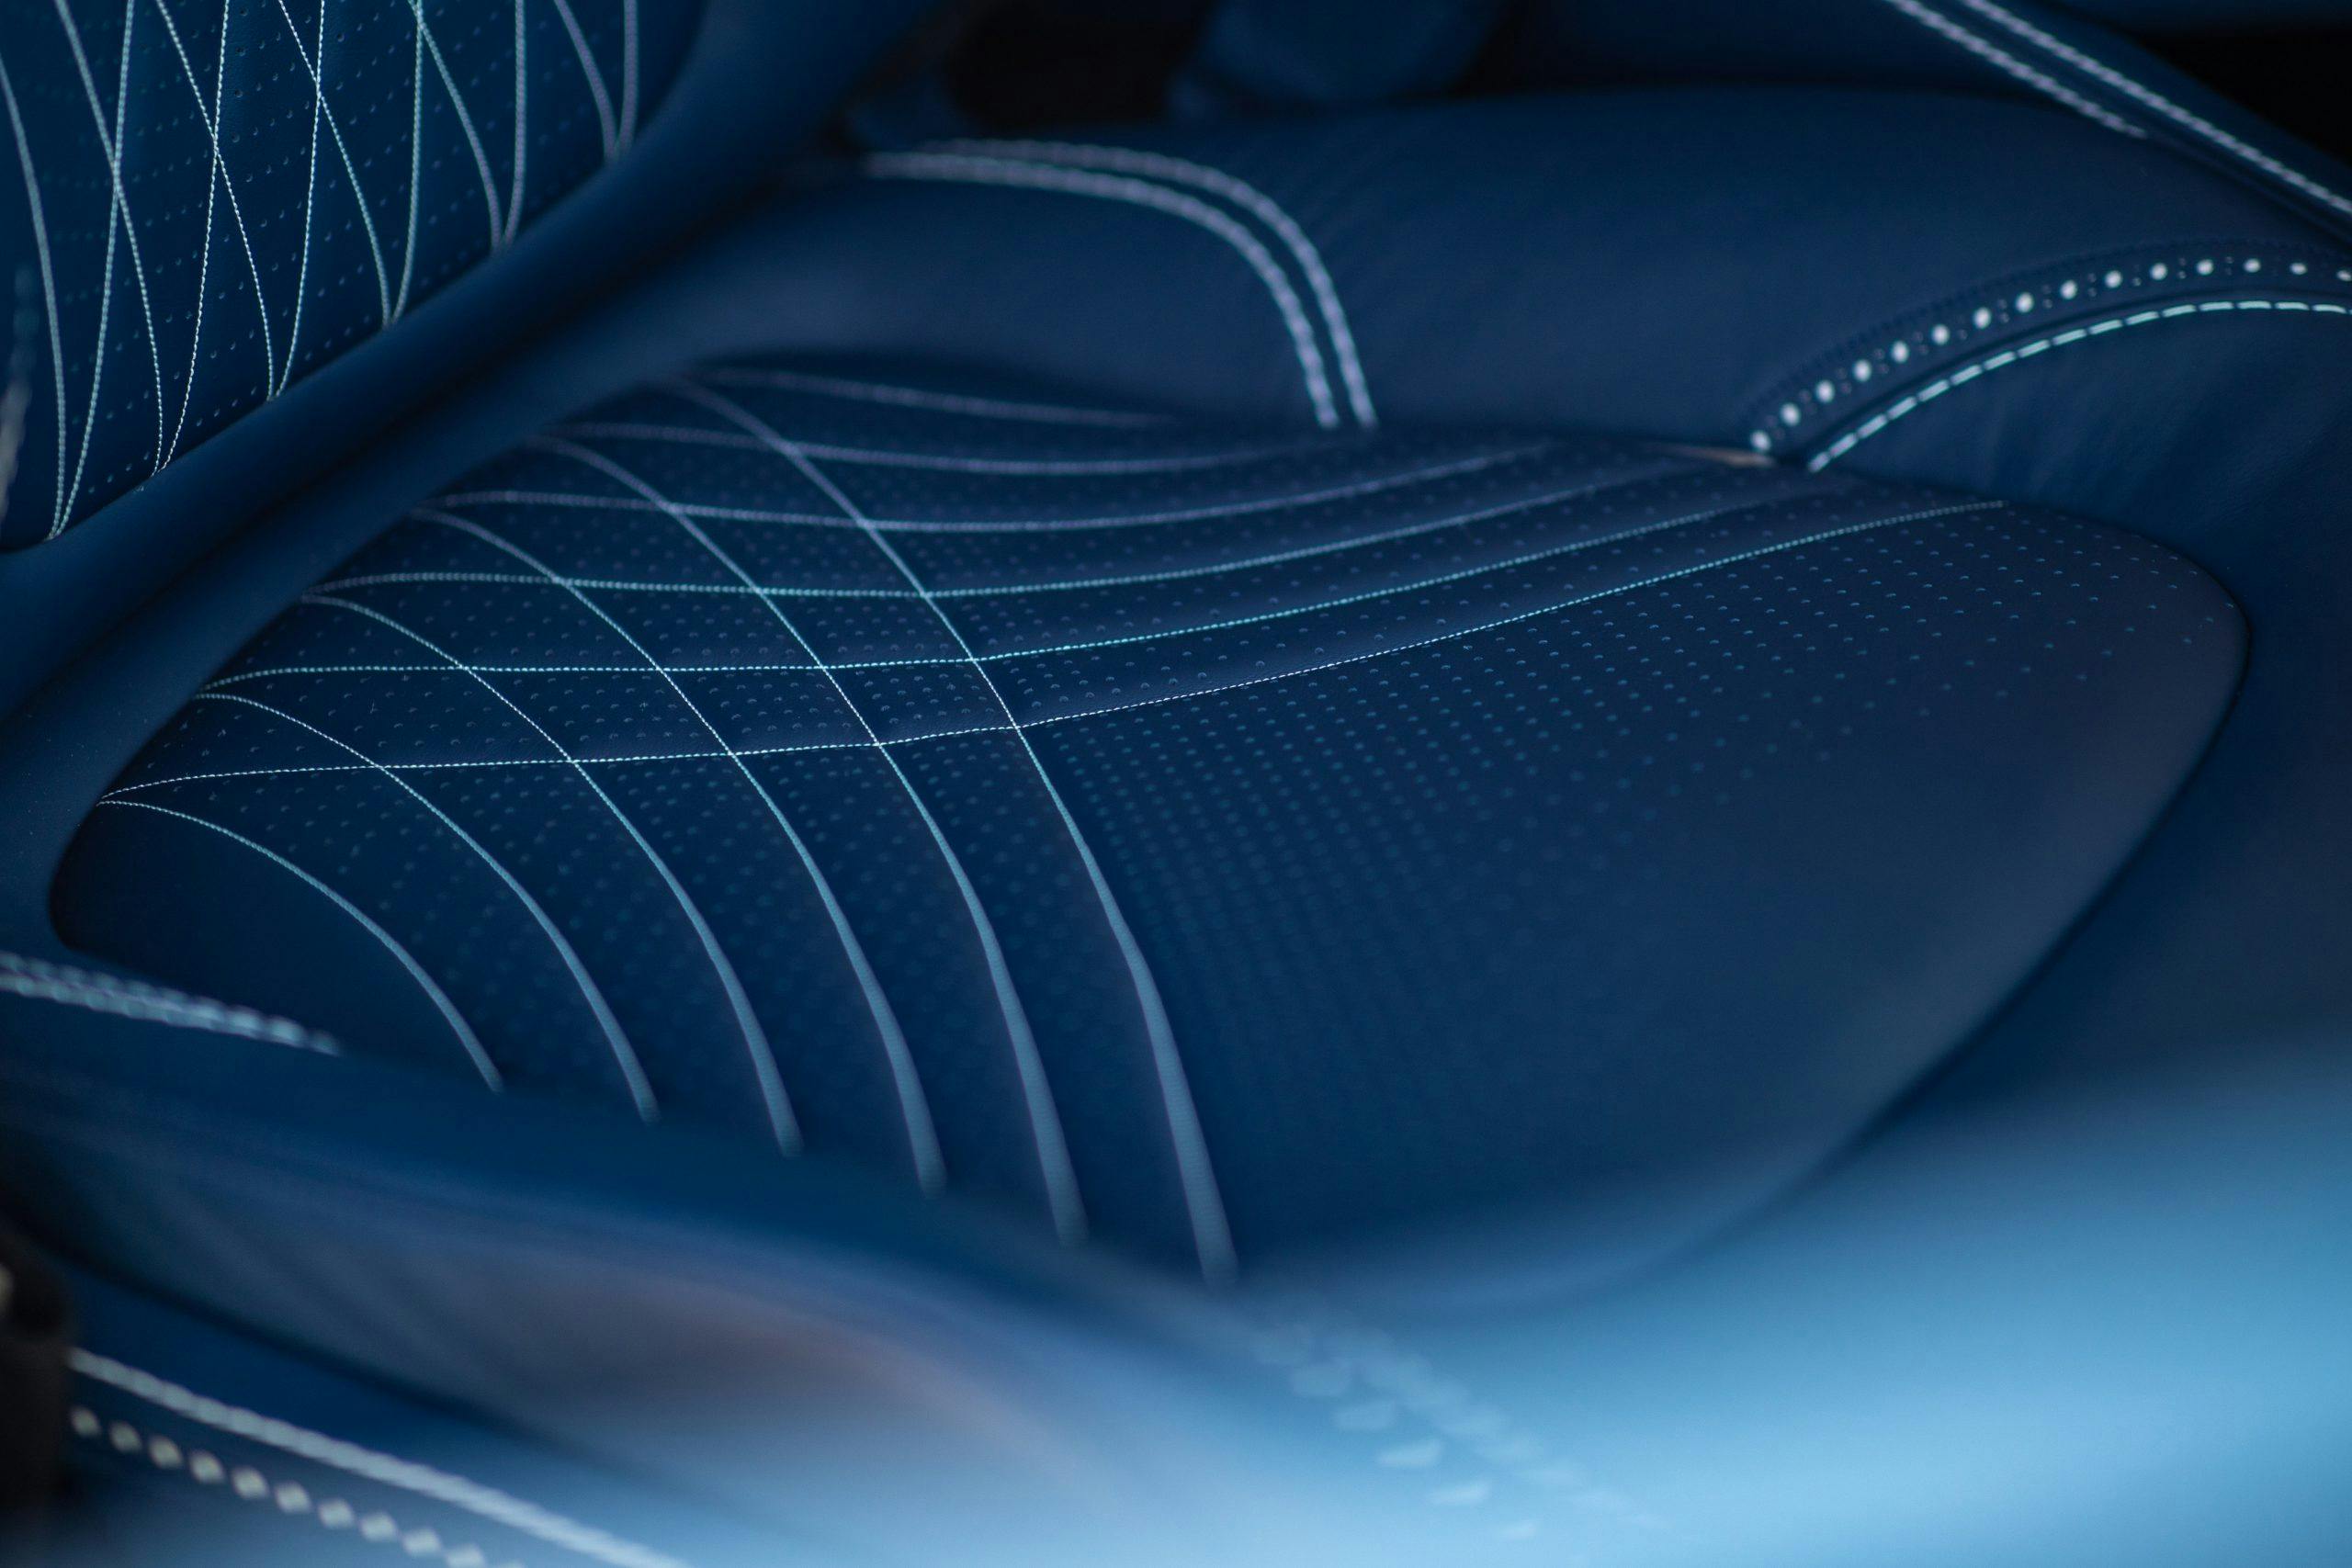 2021 Aston Martin DBX interior seat detail